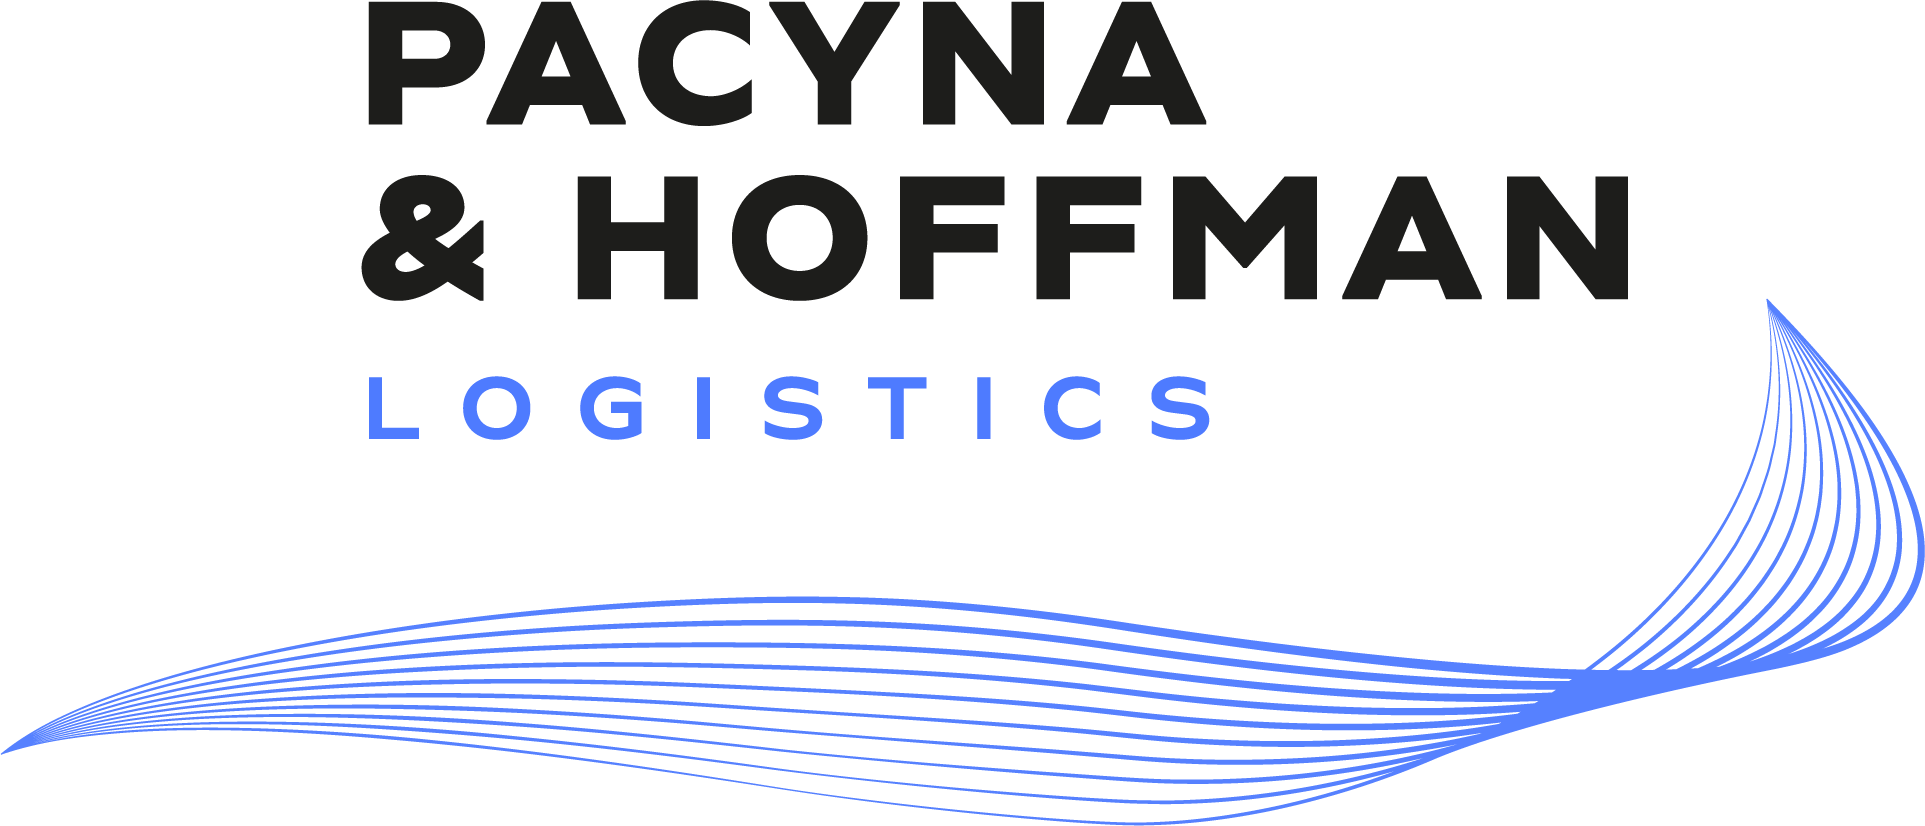 Pacyna & Hoffman Logistics Sp. z o.o.